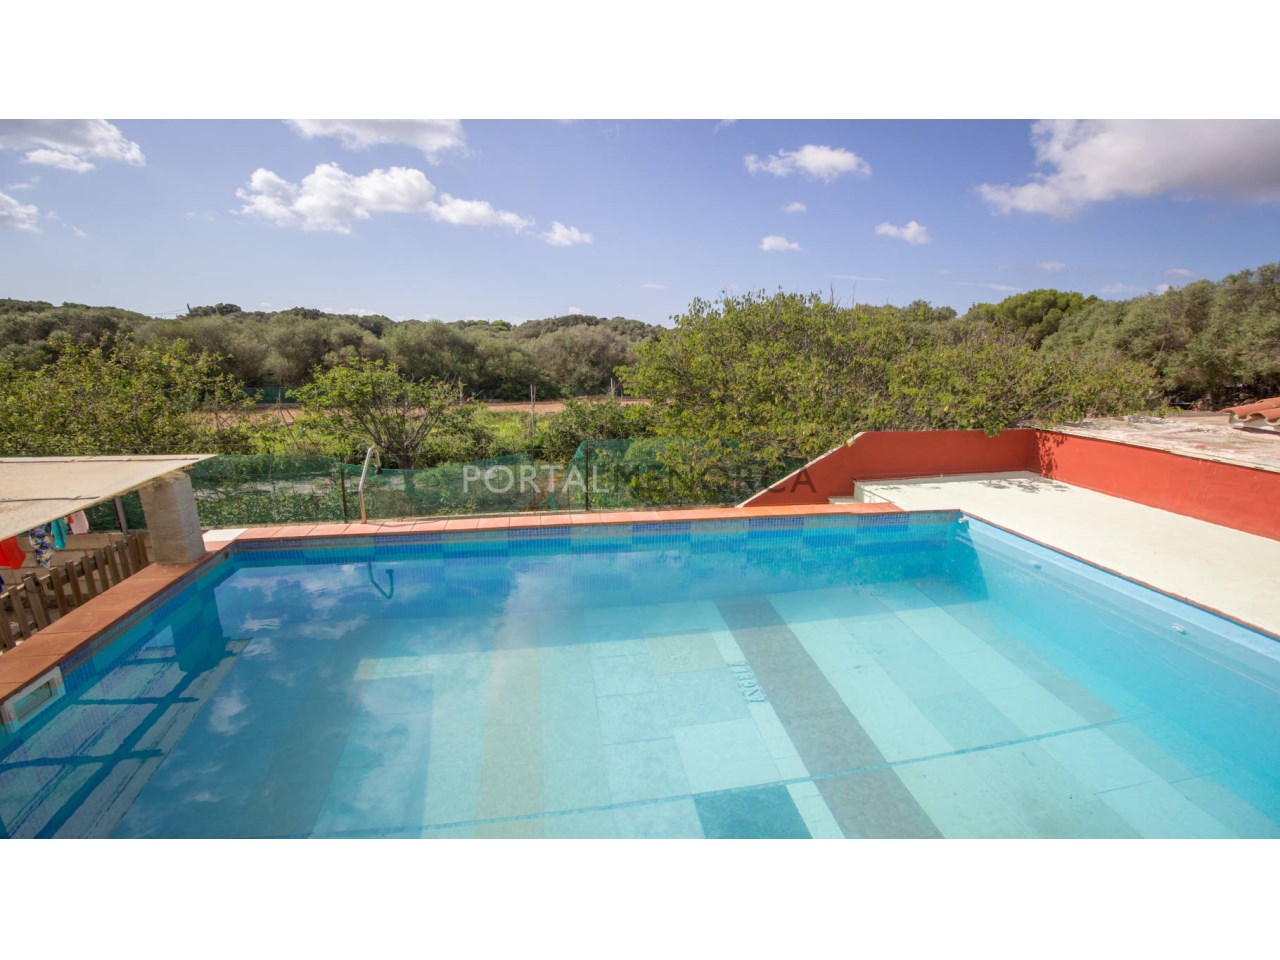 Casa de campo con piscina en venta en Binisaida